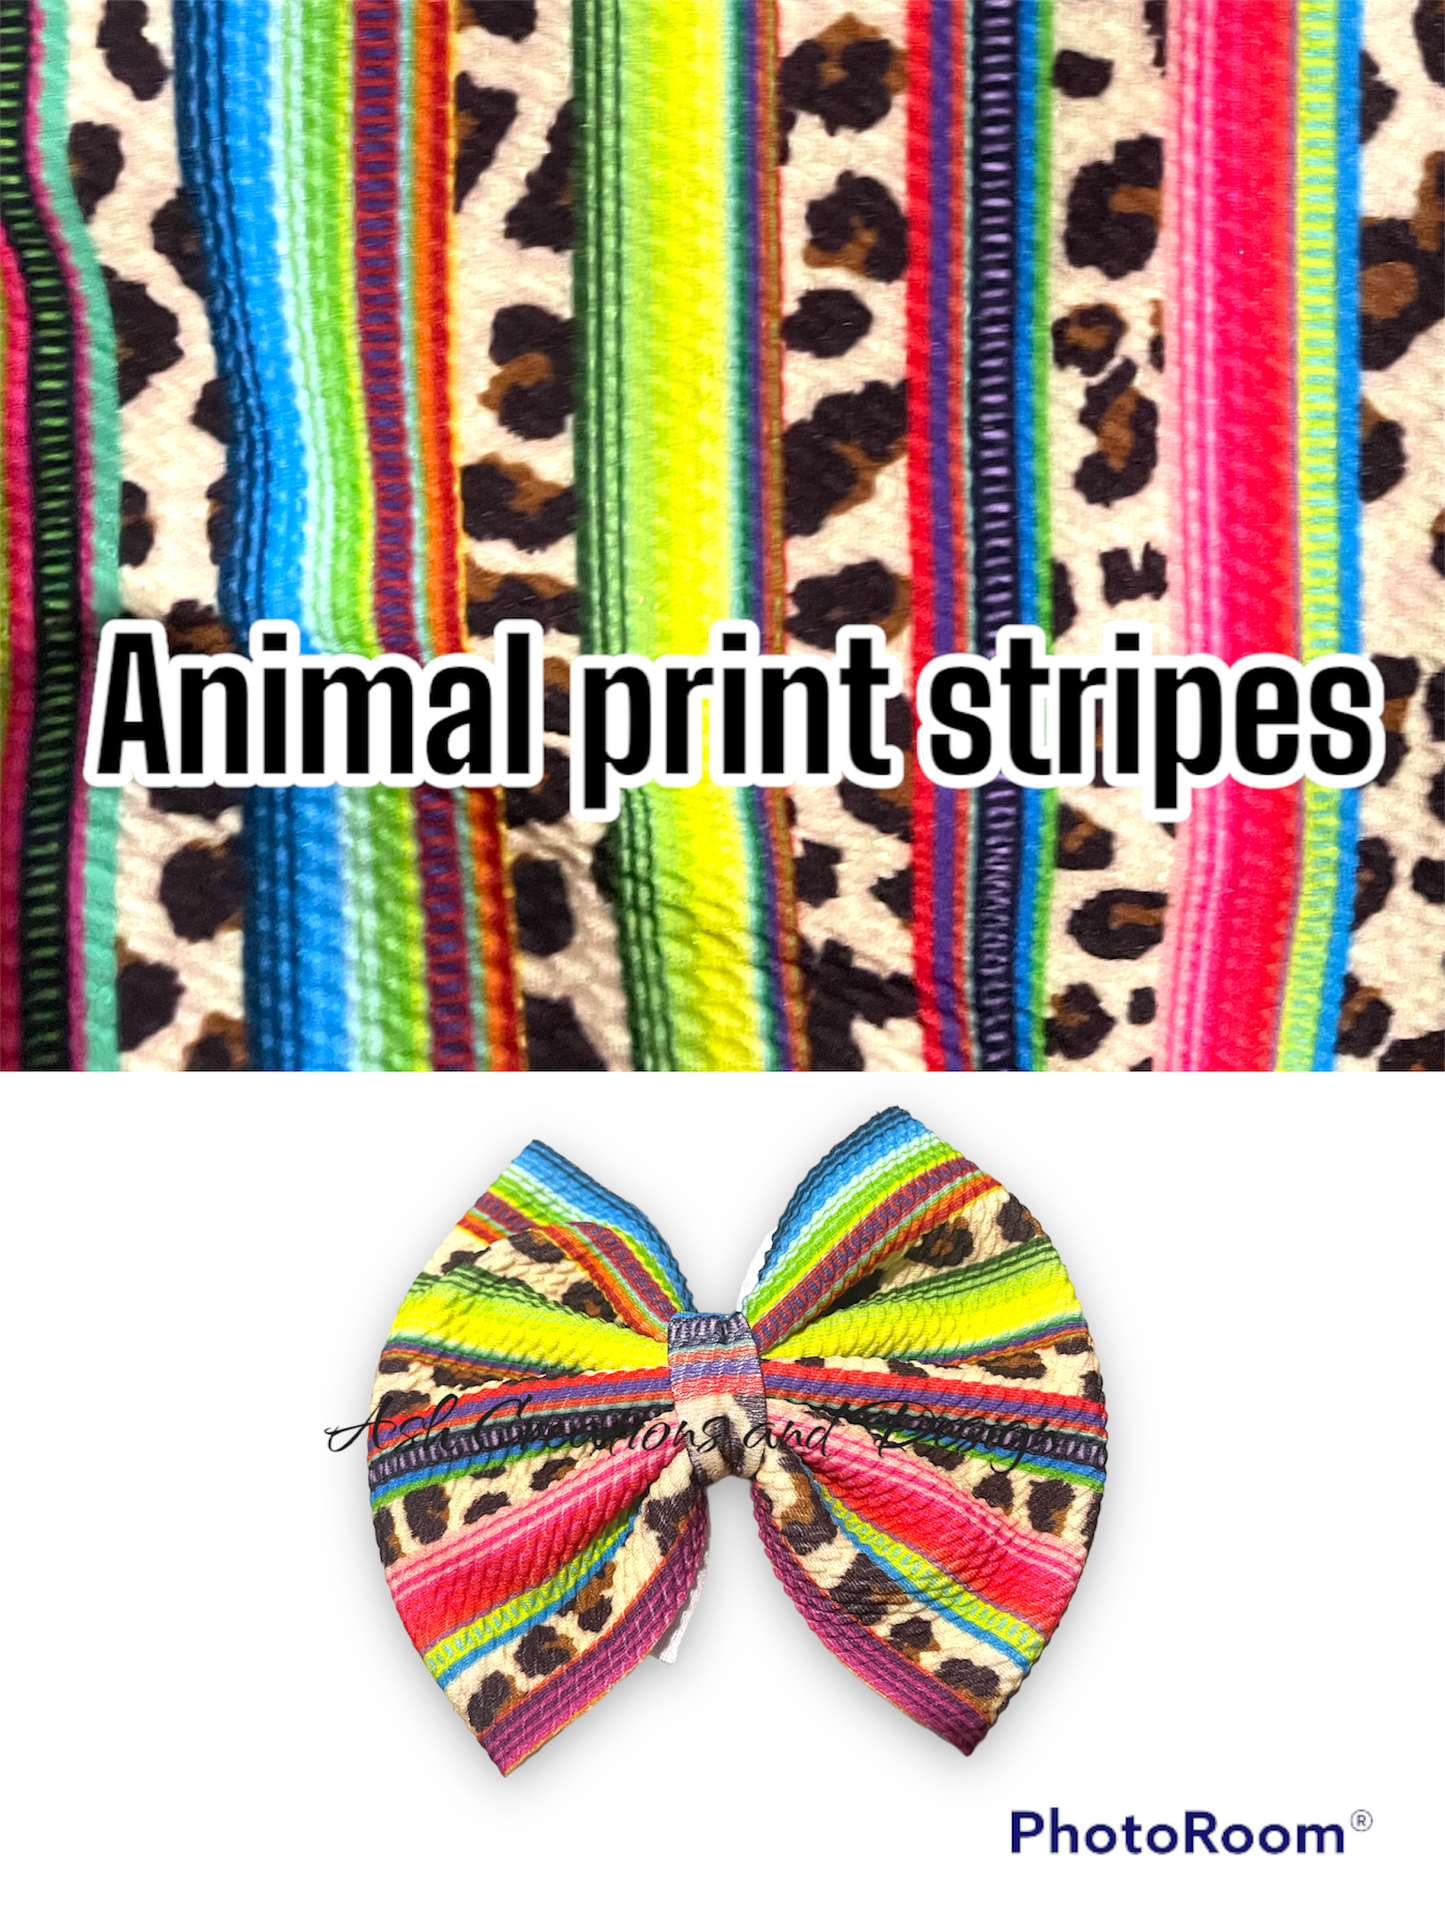 Animal stripes